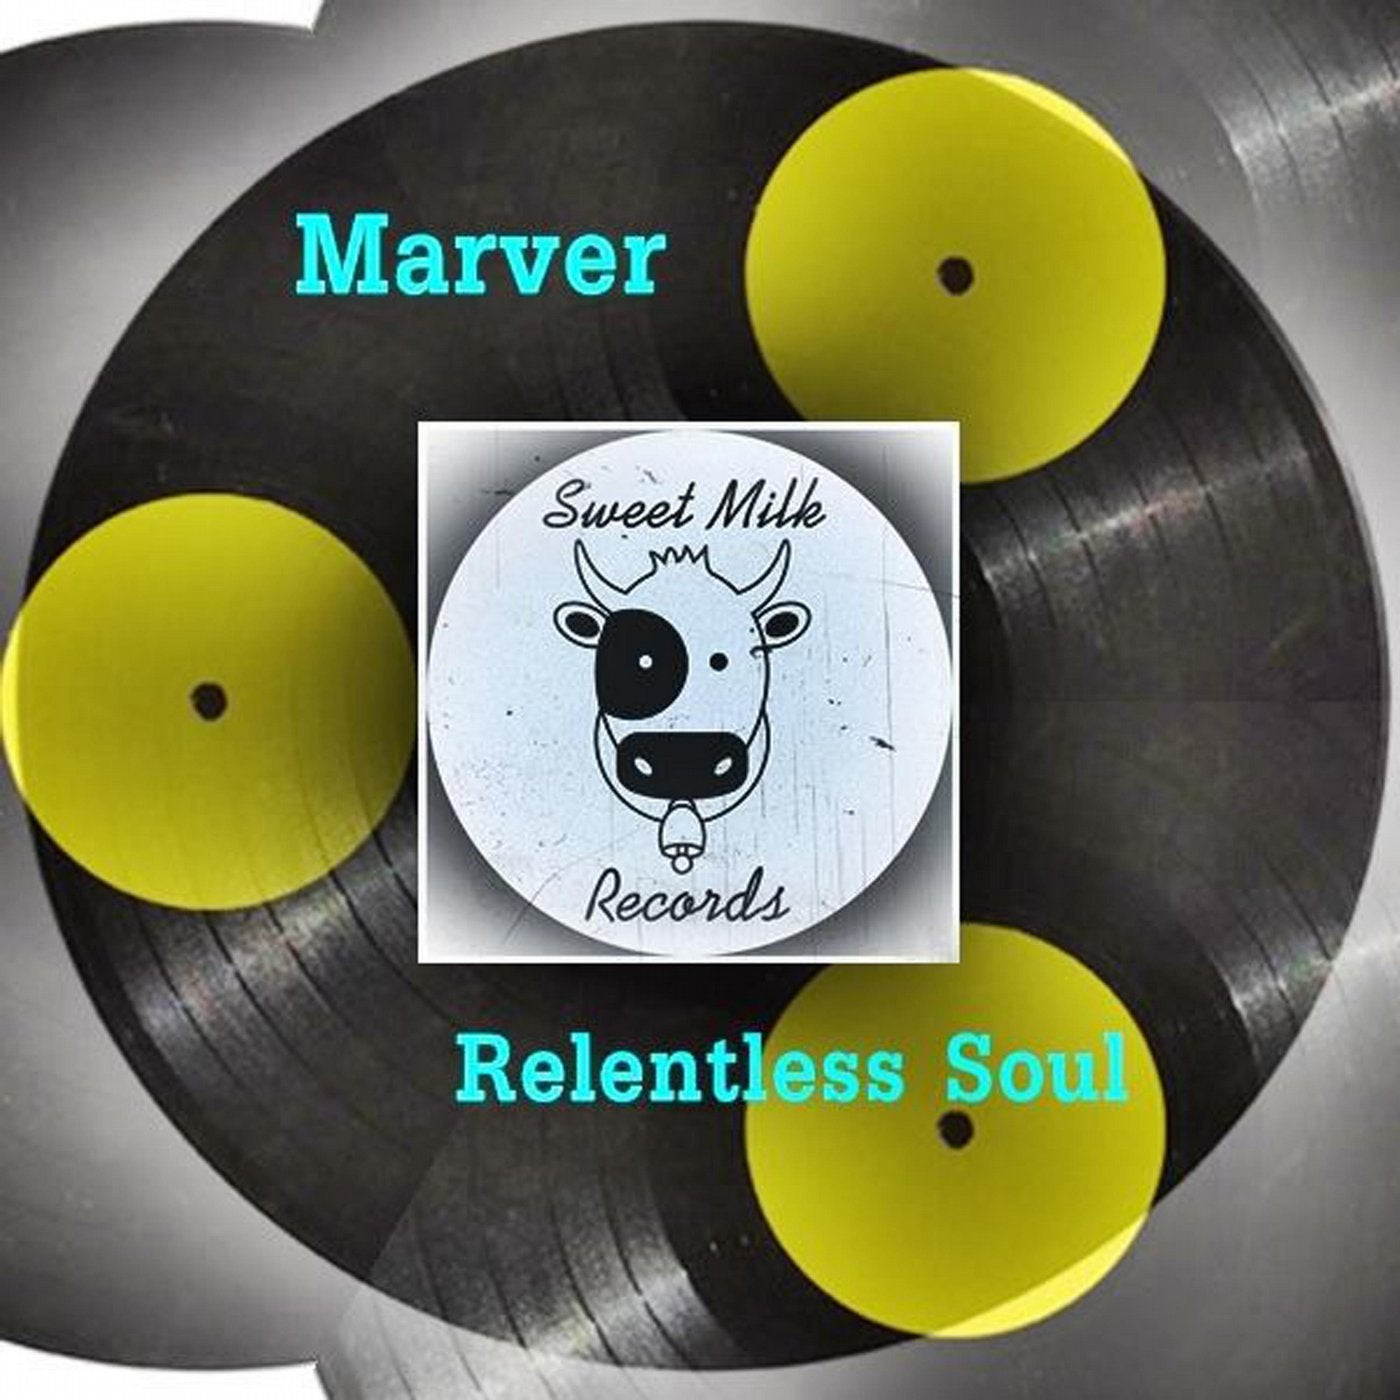 Relentless Soul